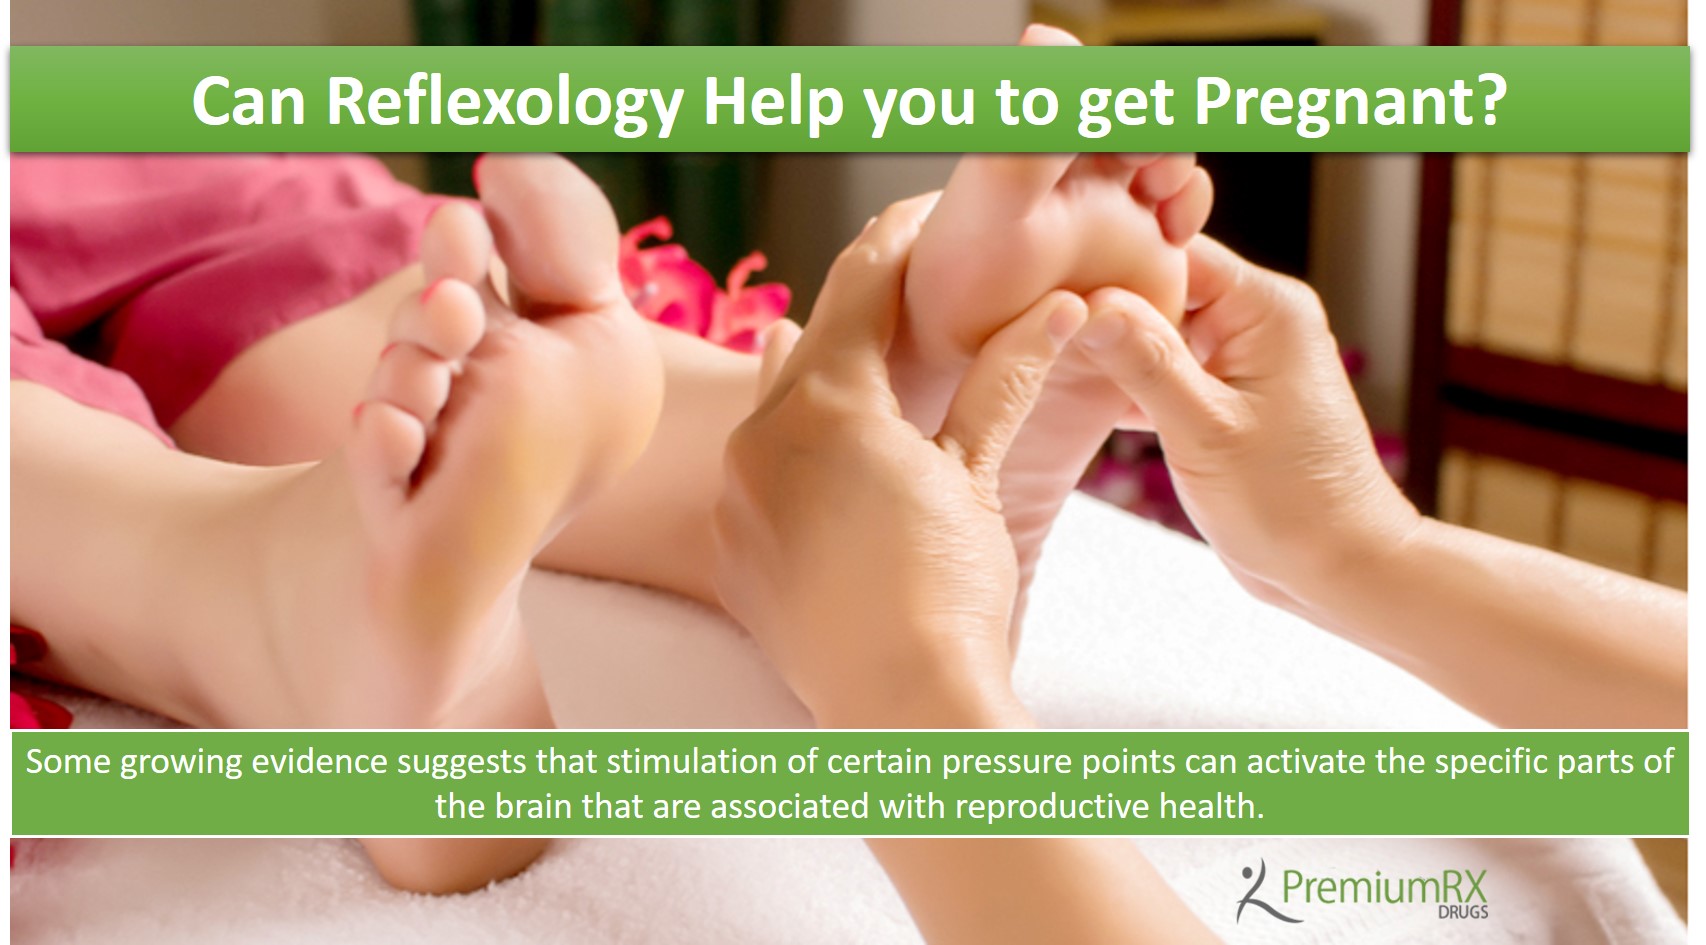 How to do Reflexology for Fertility